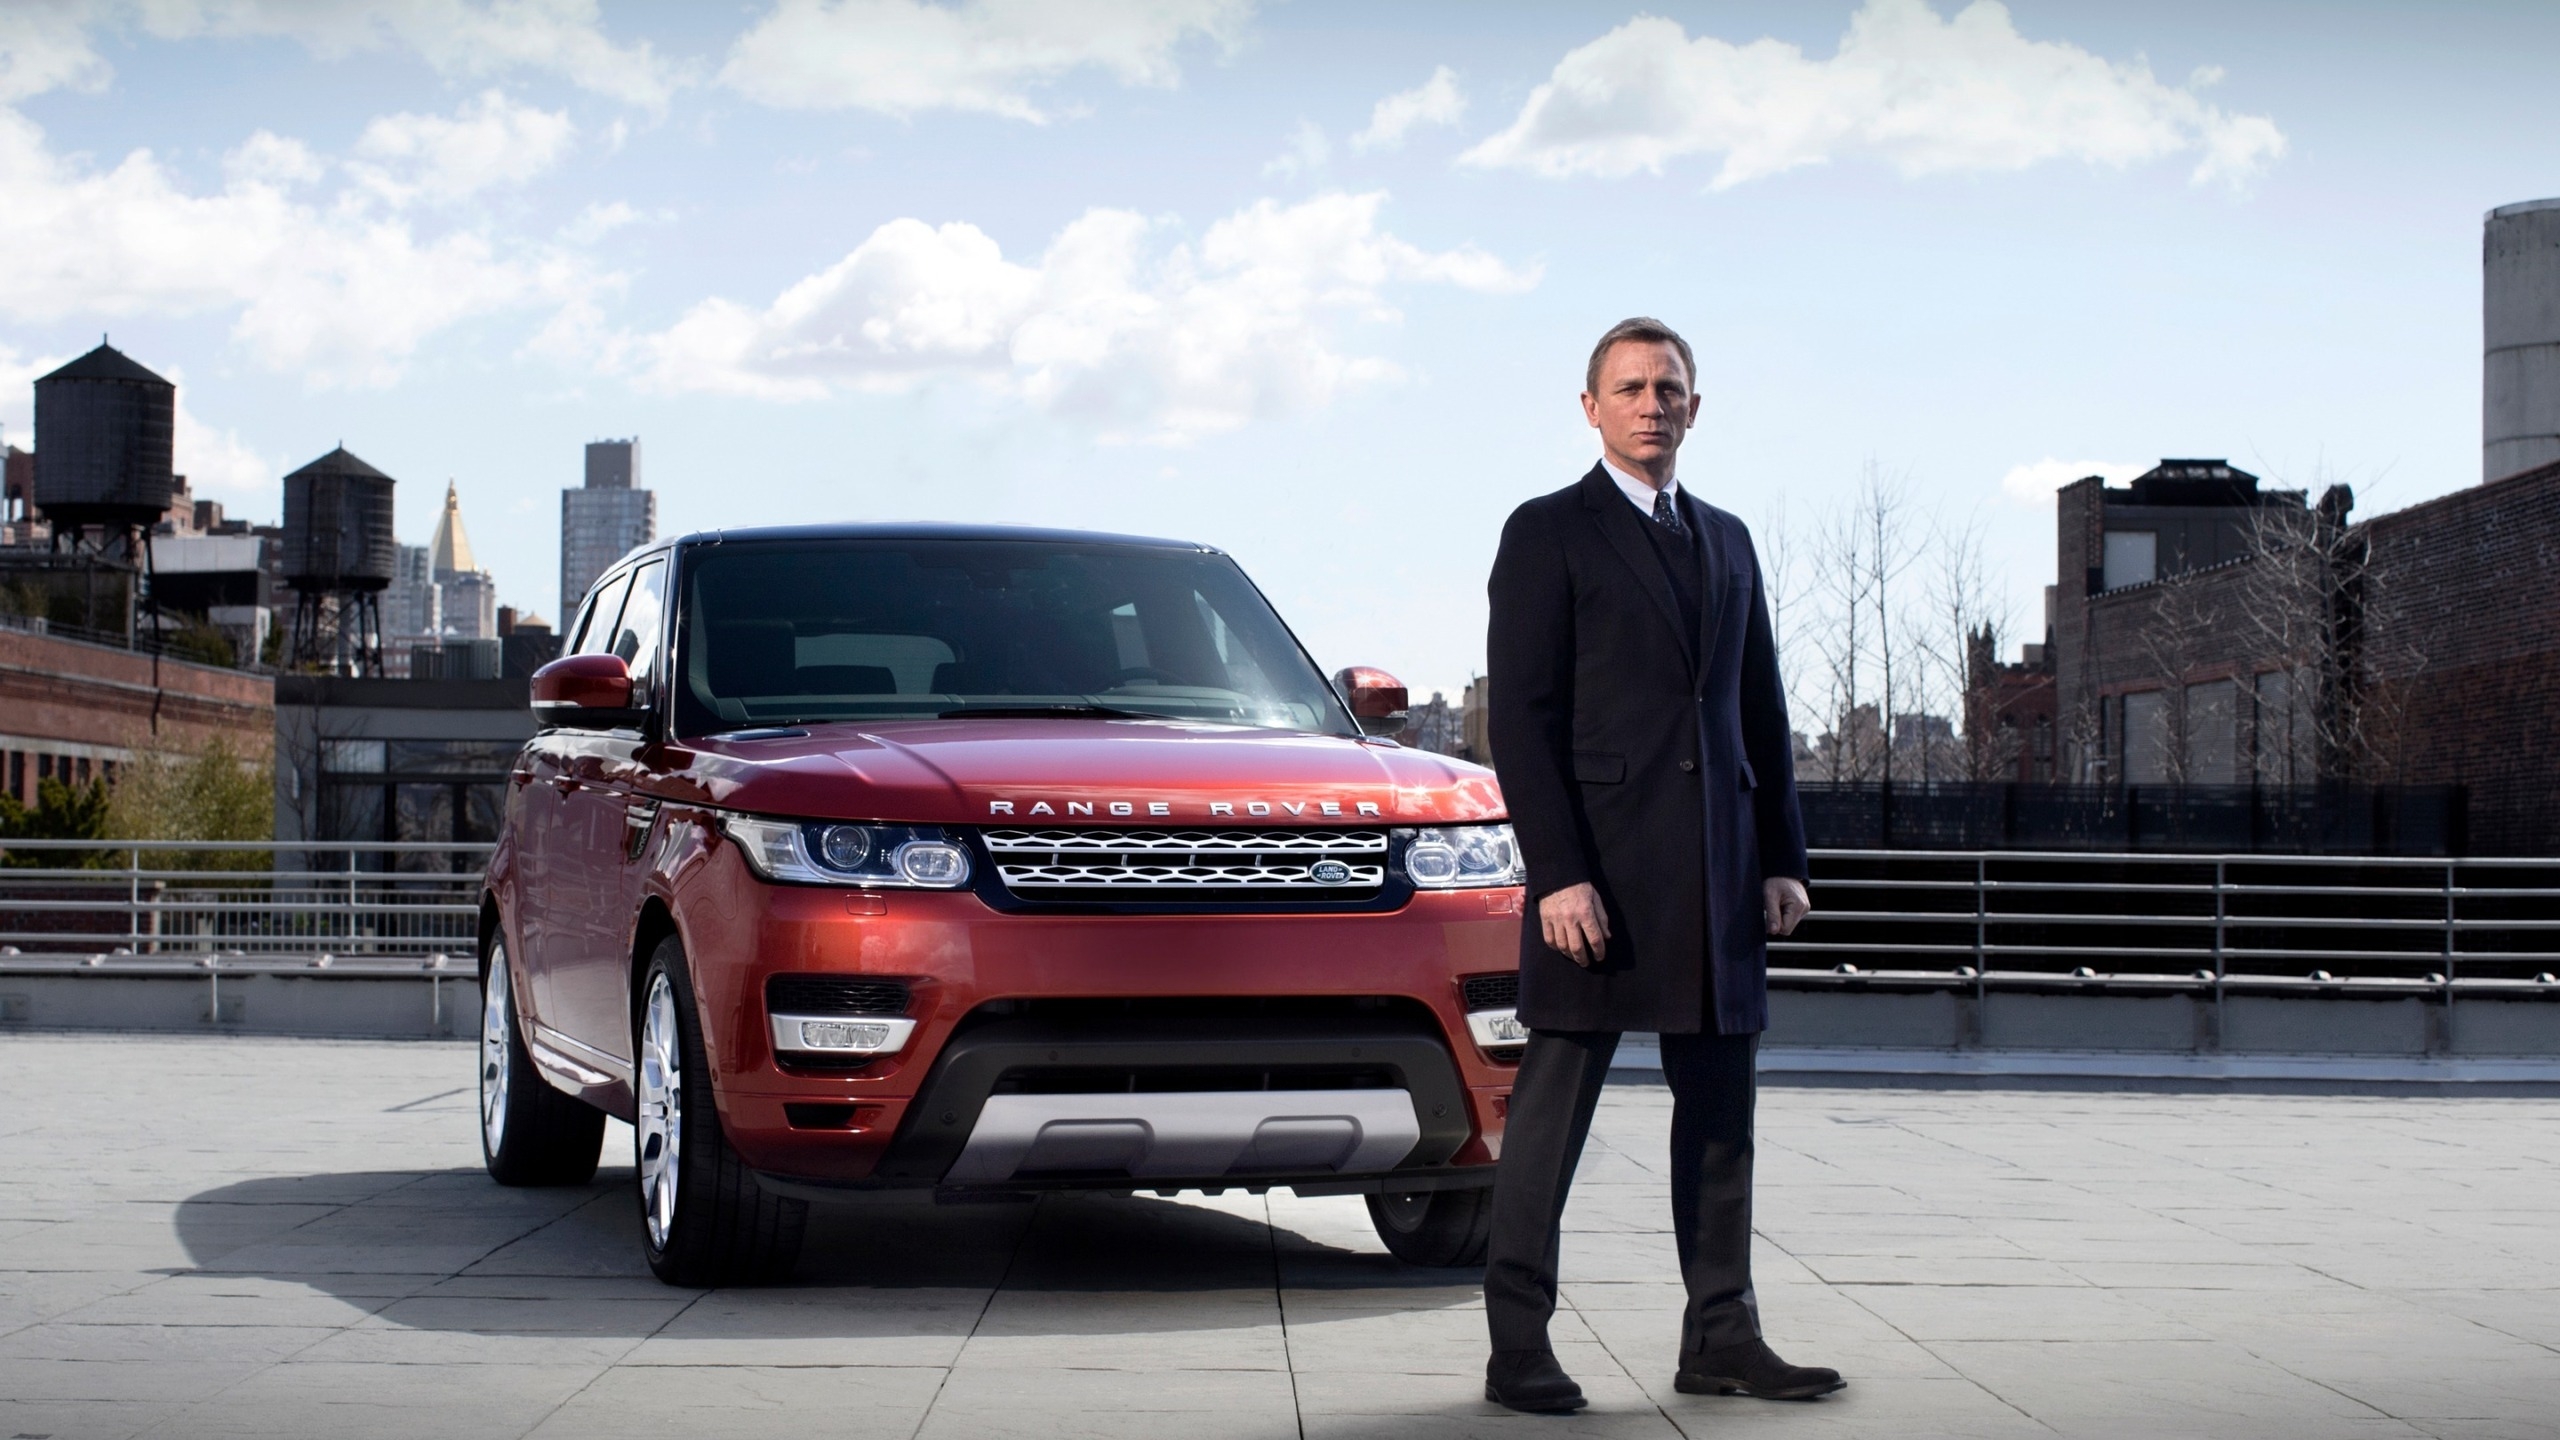 Daniel Craig and Range Rover for 2560x1440 HDTV resolution